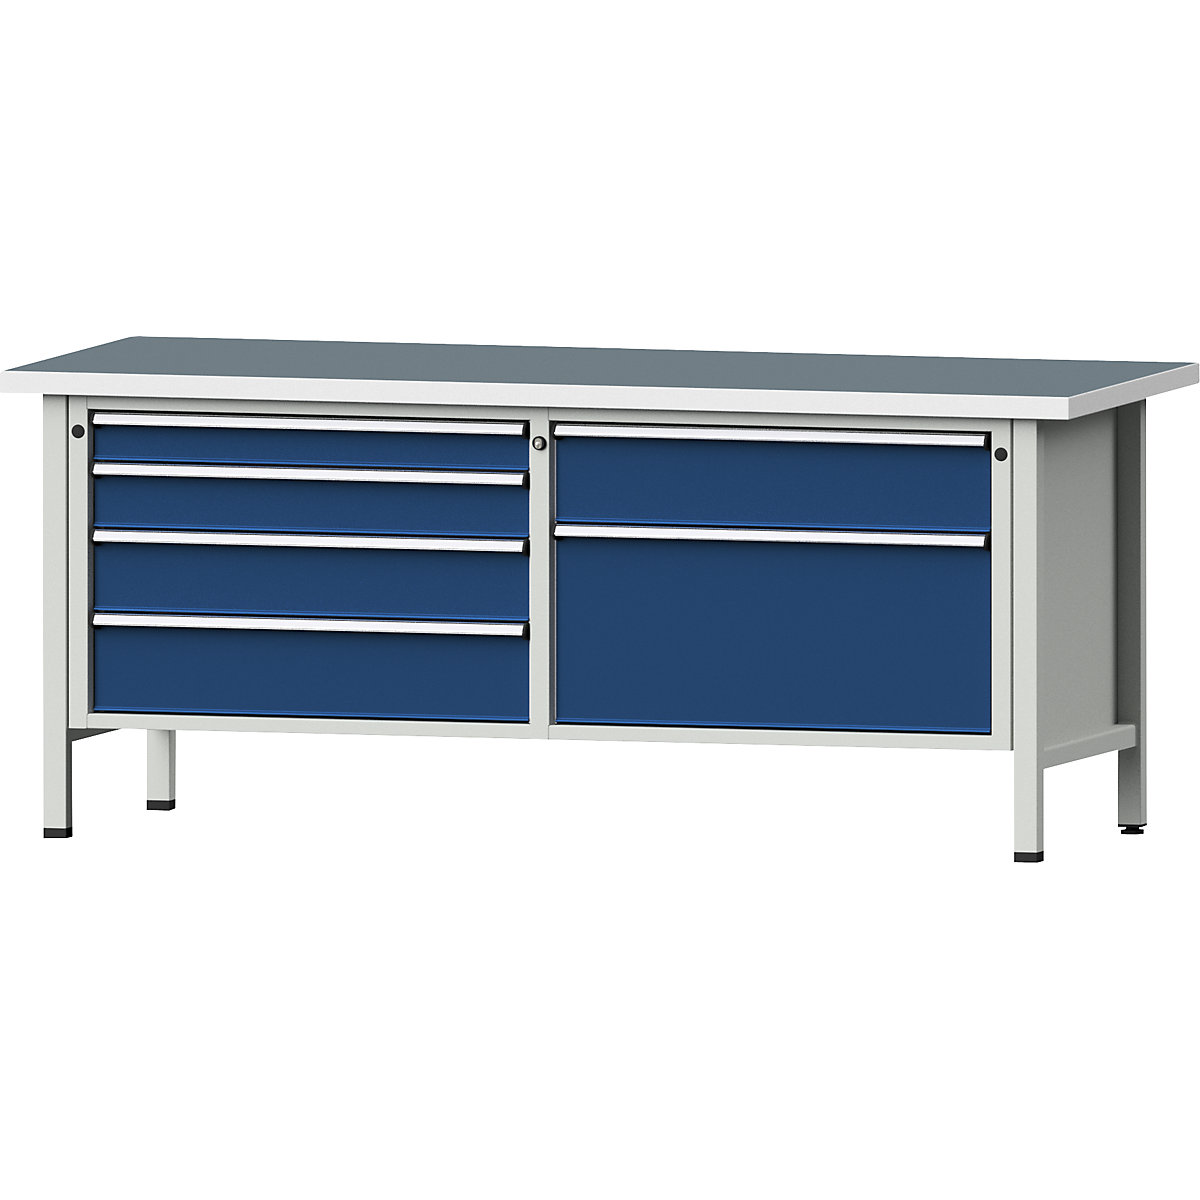 Établi avec tiroirs XL/XXL, sur piétement – ANKE, largeur 2000 mm, 6 tiroirs, plateau universel, façade bleu gentiane-13